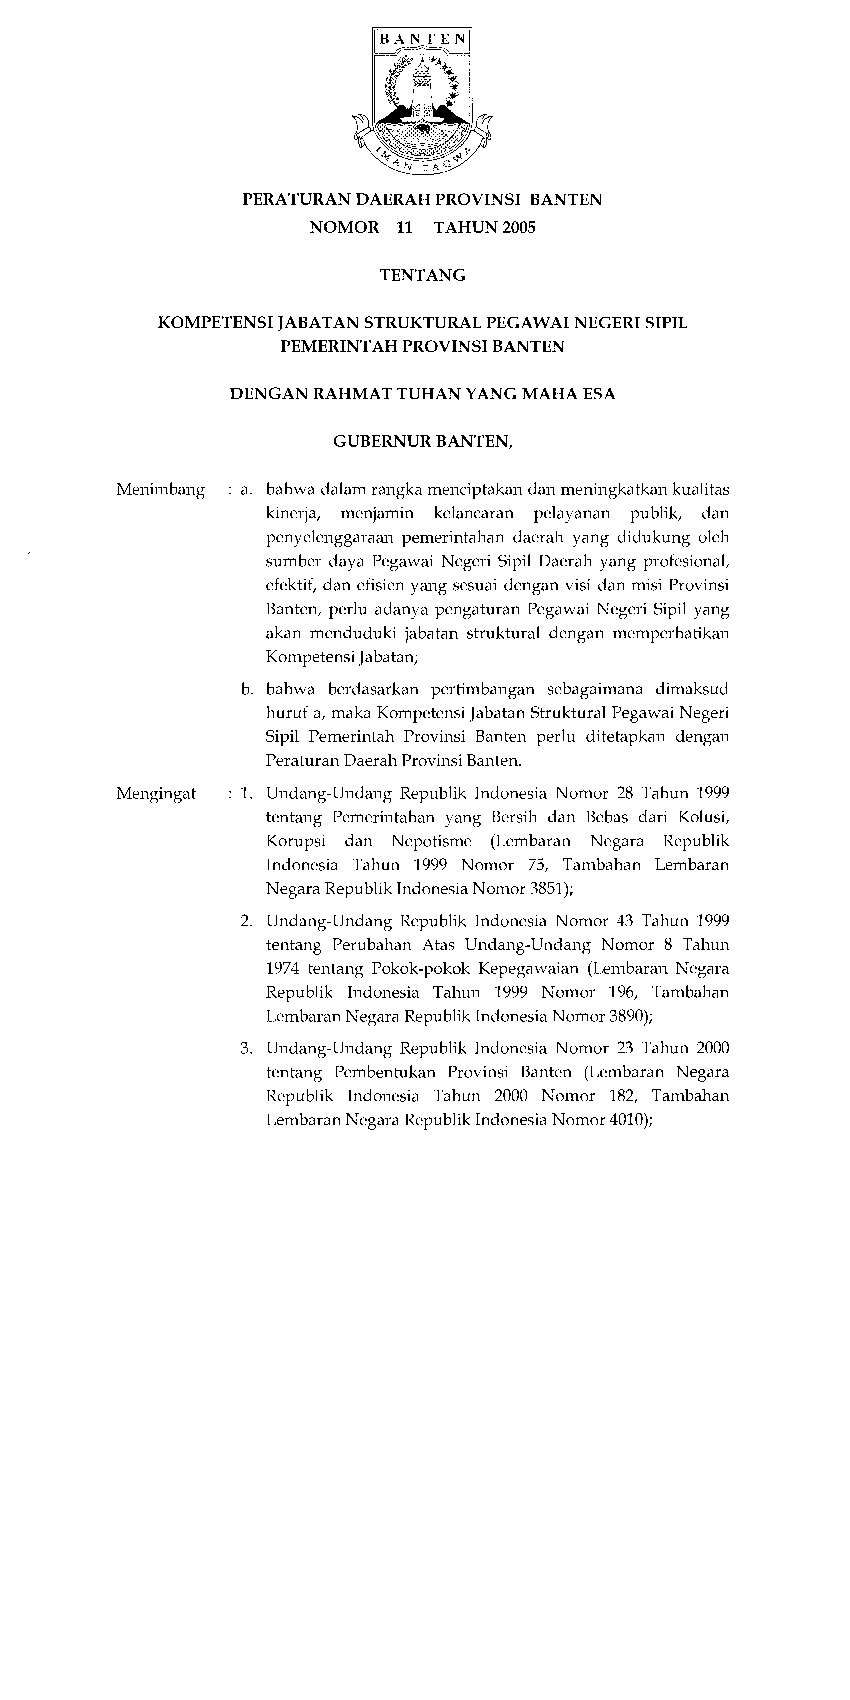 Peraturan Daerah Provinsi Banten No 11 tahun 2005 tentang Kompetensi Jabatan Struktural Pegawai Negeri Sipil